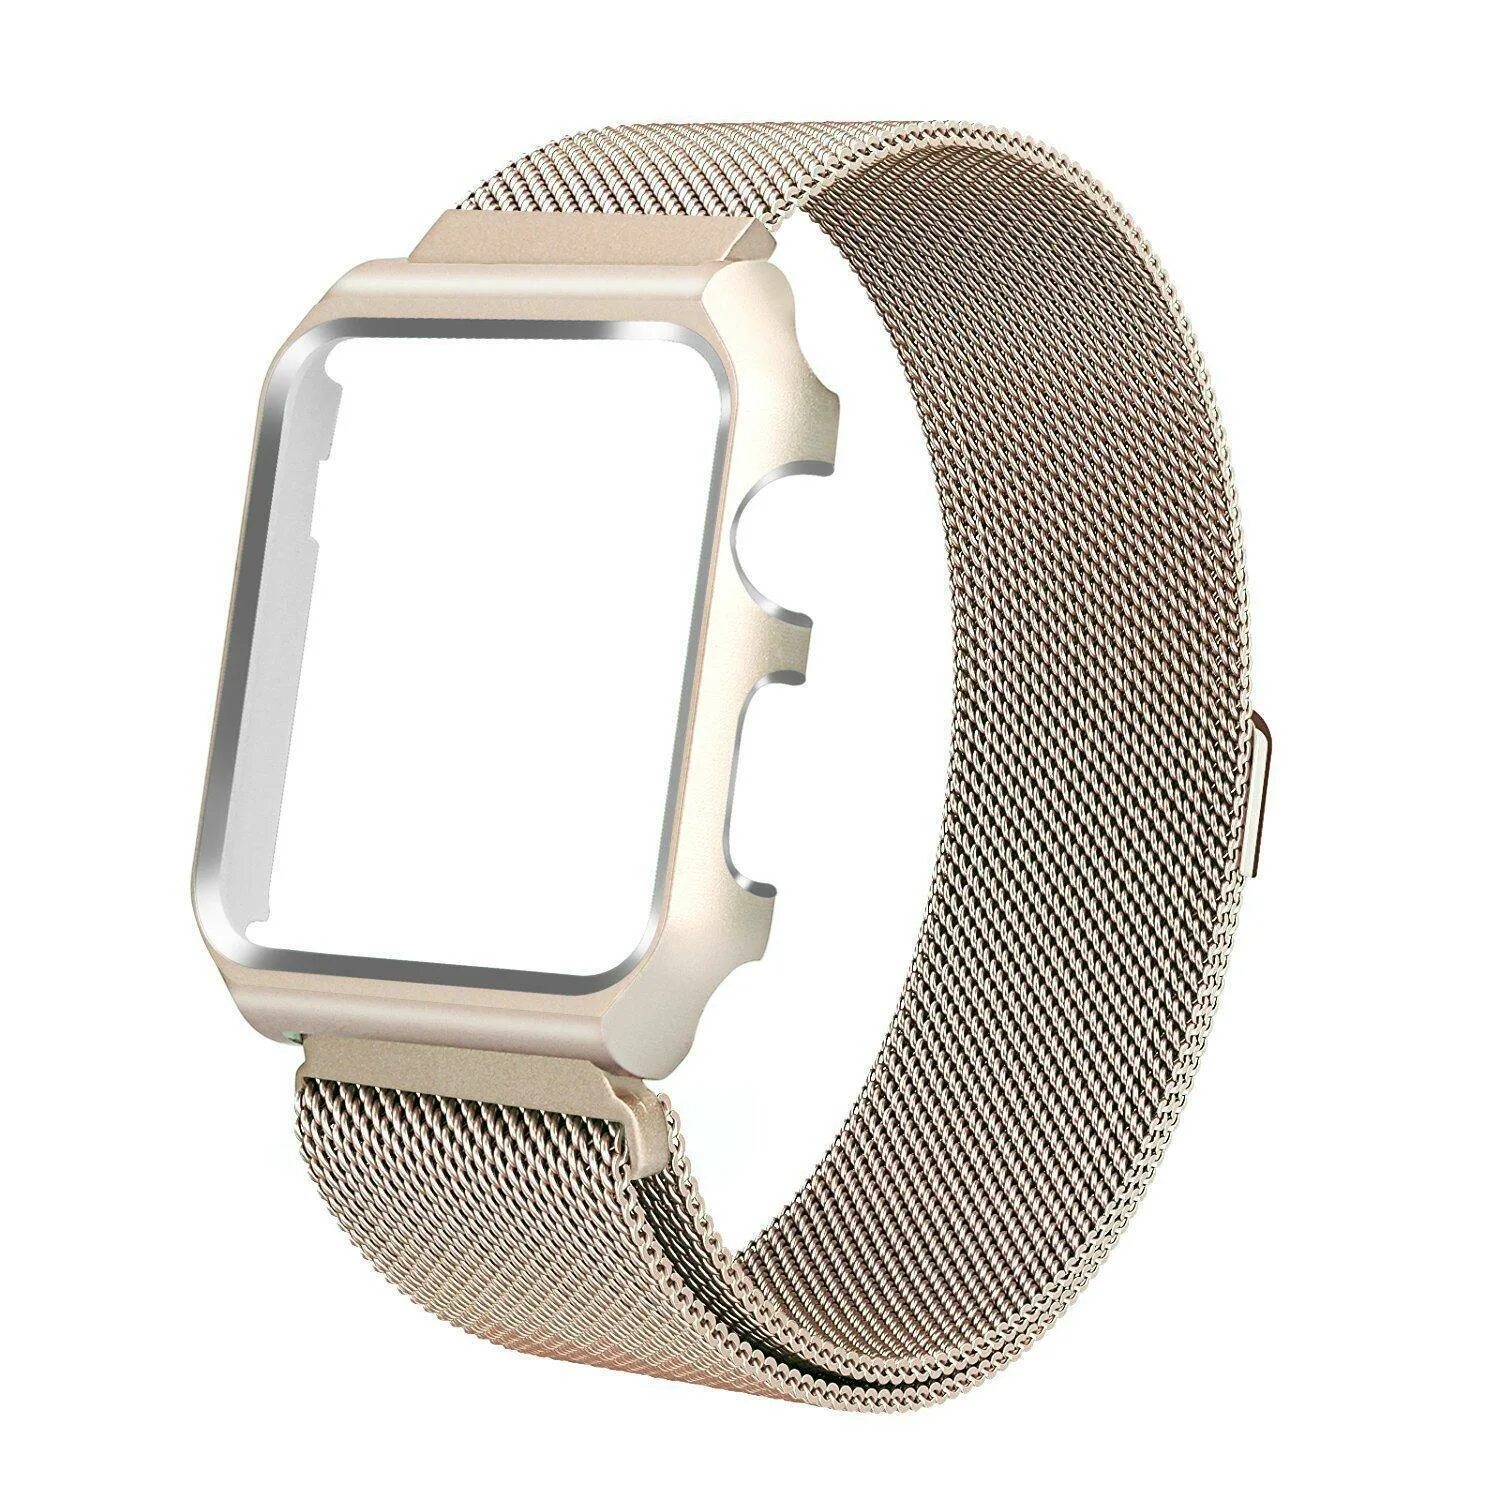 Эппл вотч с металлическим ремешком. Ремешок Apple 44mm Milanese loop. Ремешок Миланская петля для Apple watch. Ремешки на Эппл вотч 3. Series 3 38mm